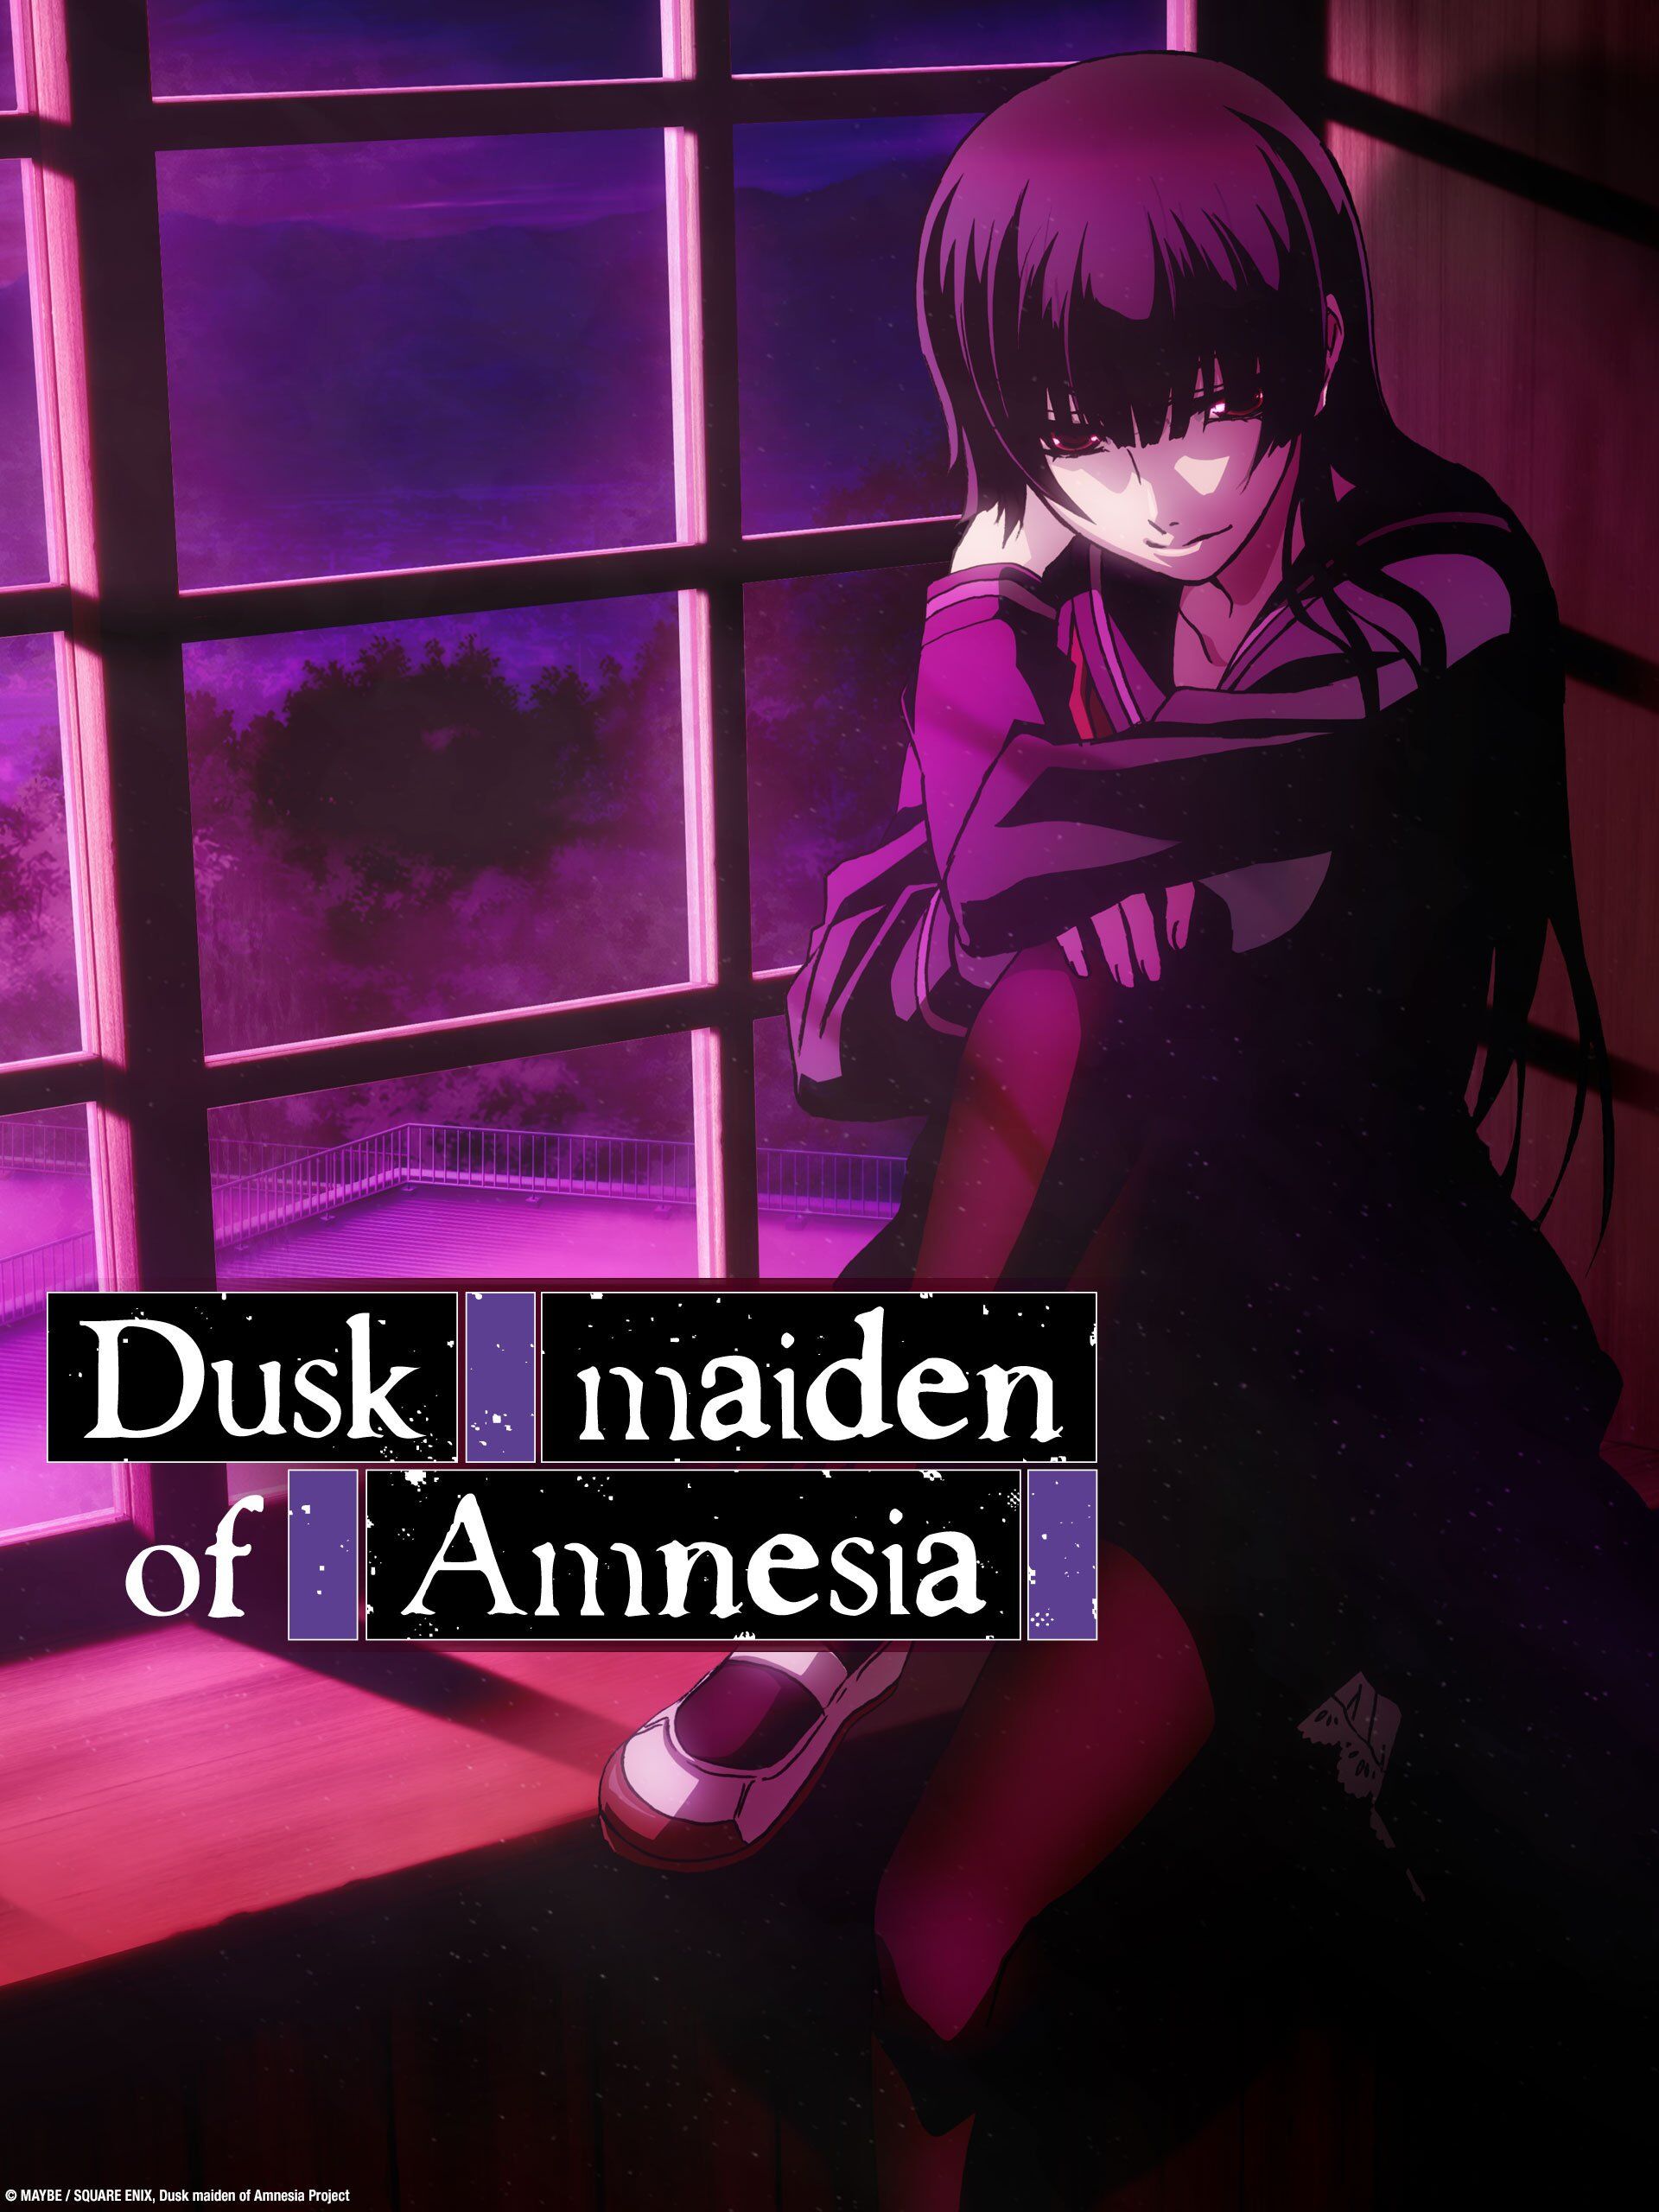 Best Amnesia Anime List  Popular Anime With Amnesia